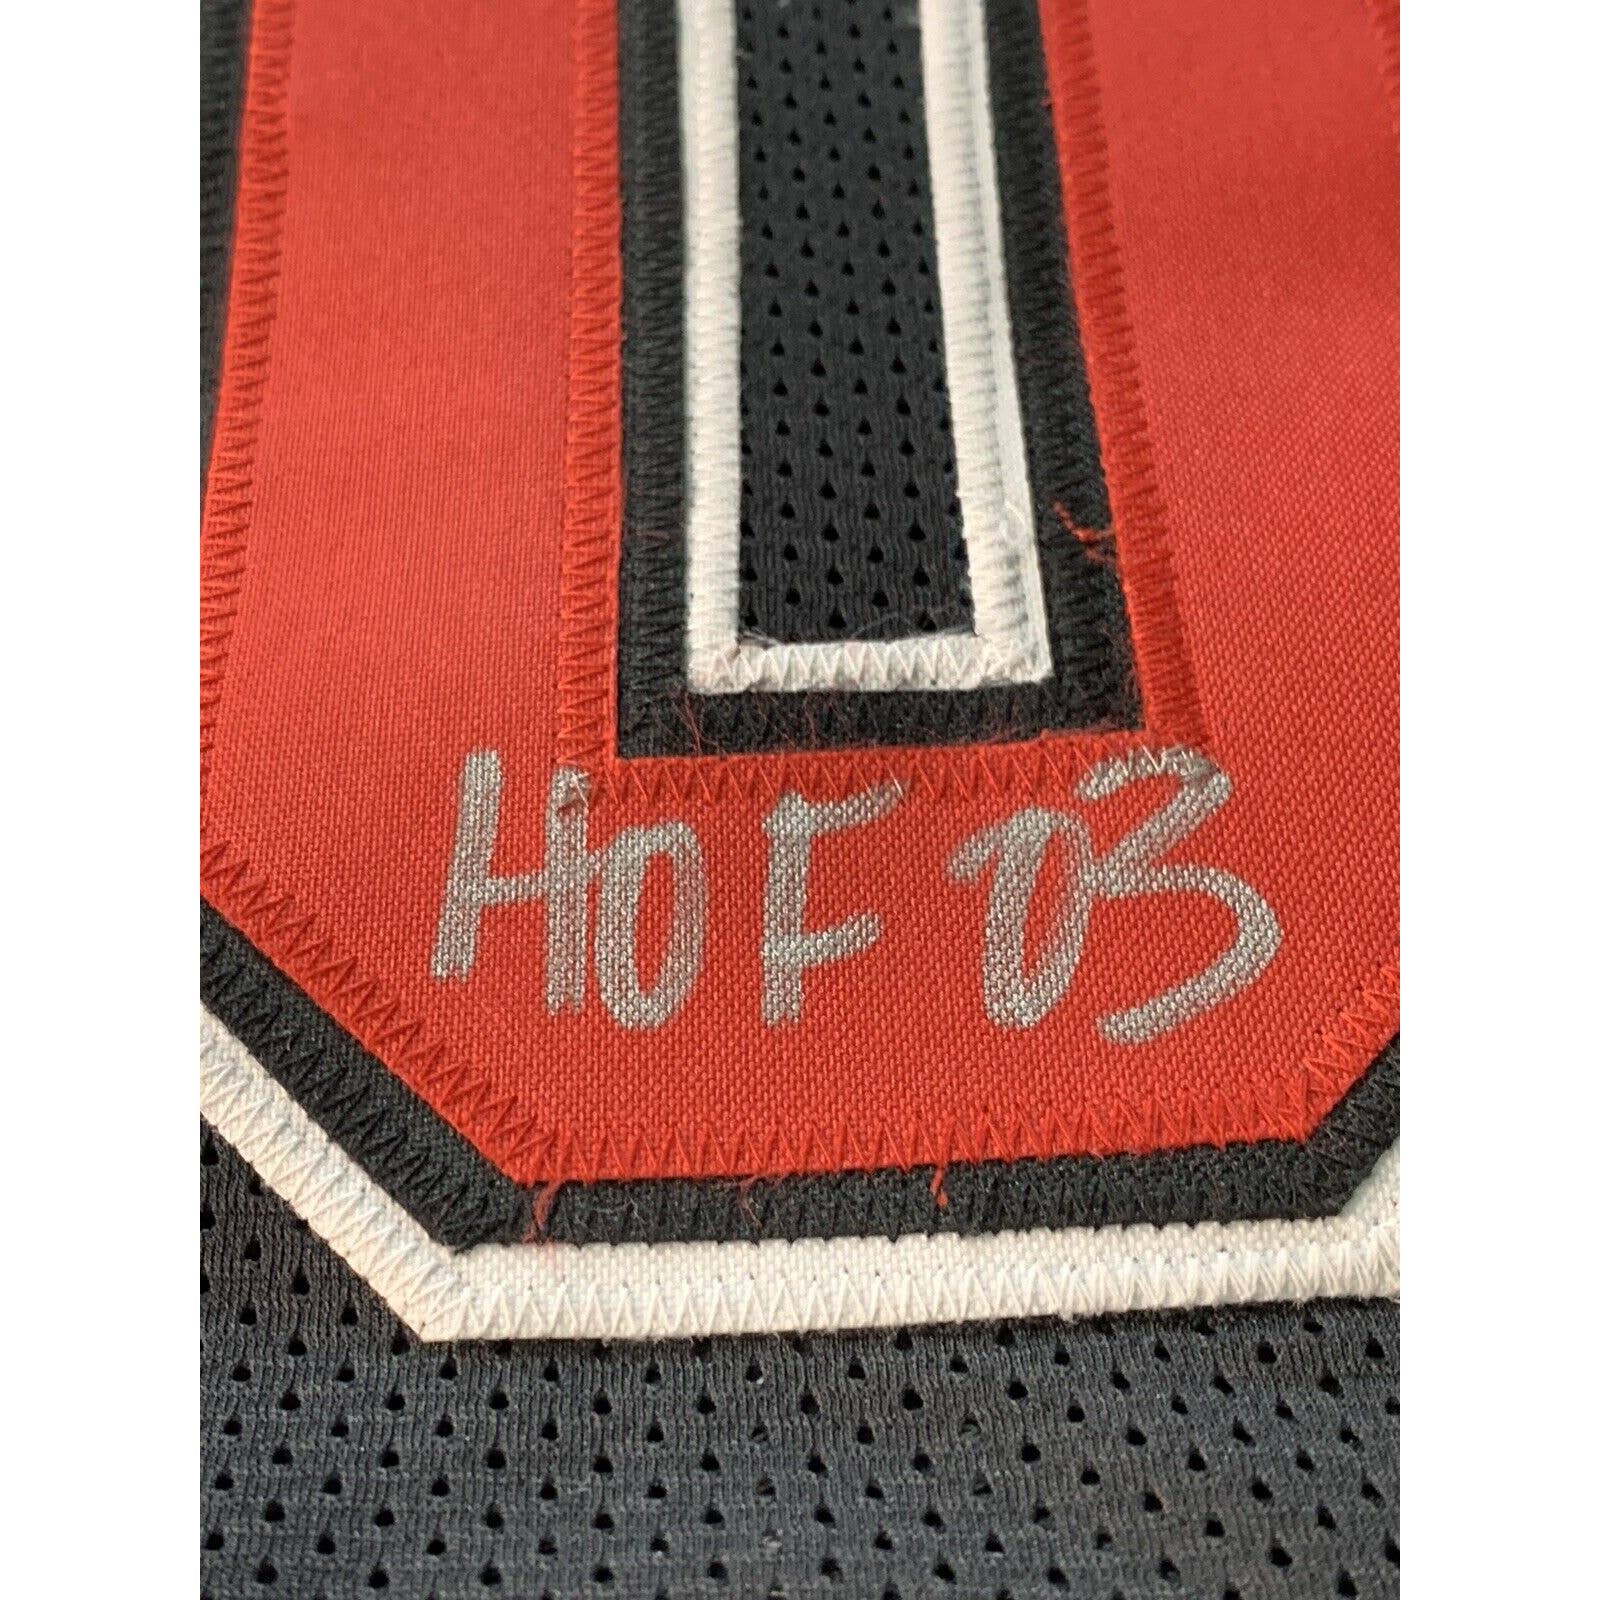 Robert Parish Autographed/Signed Jersey PSA/DNA Chicago Bulls All Star HOF - TreasuresEvolved